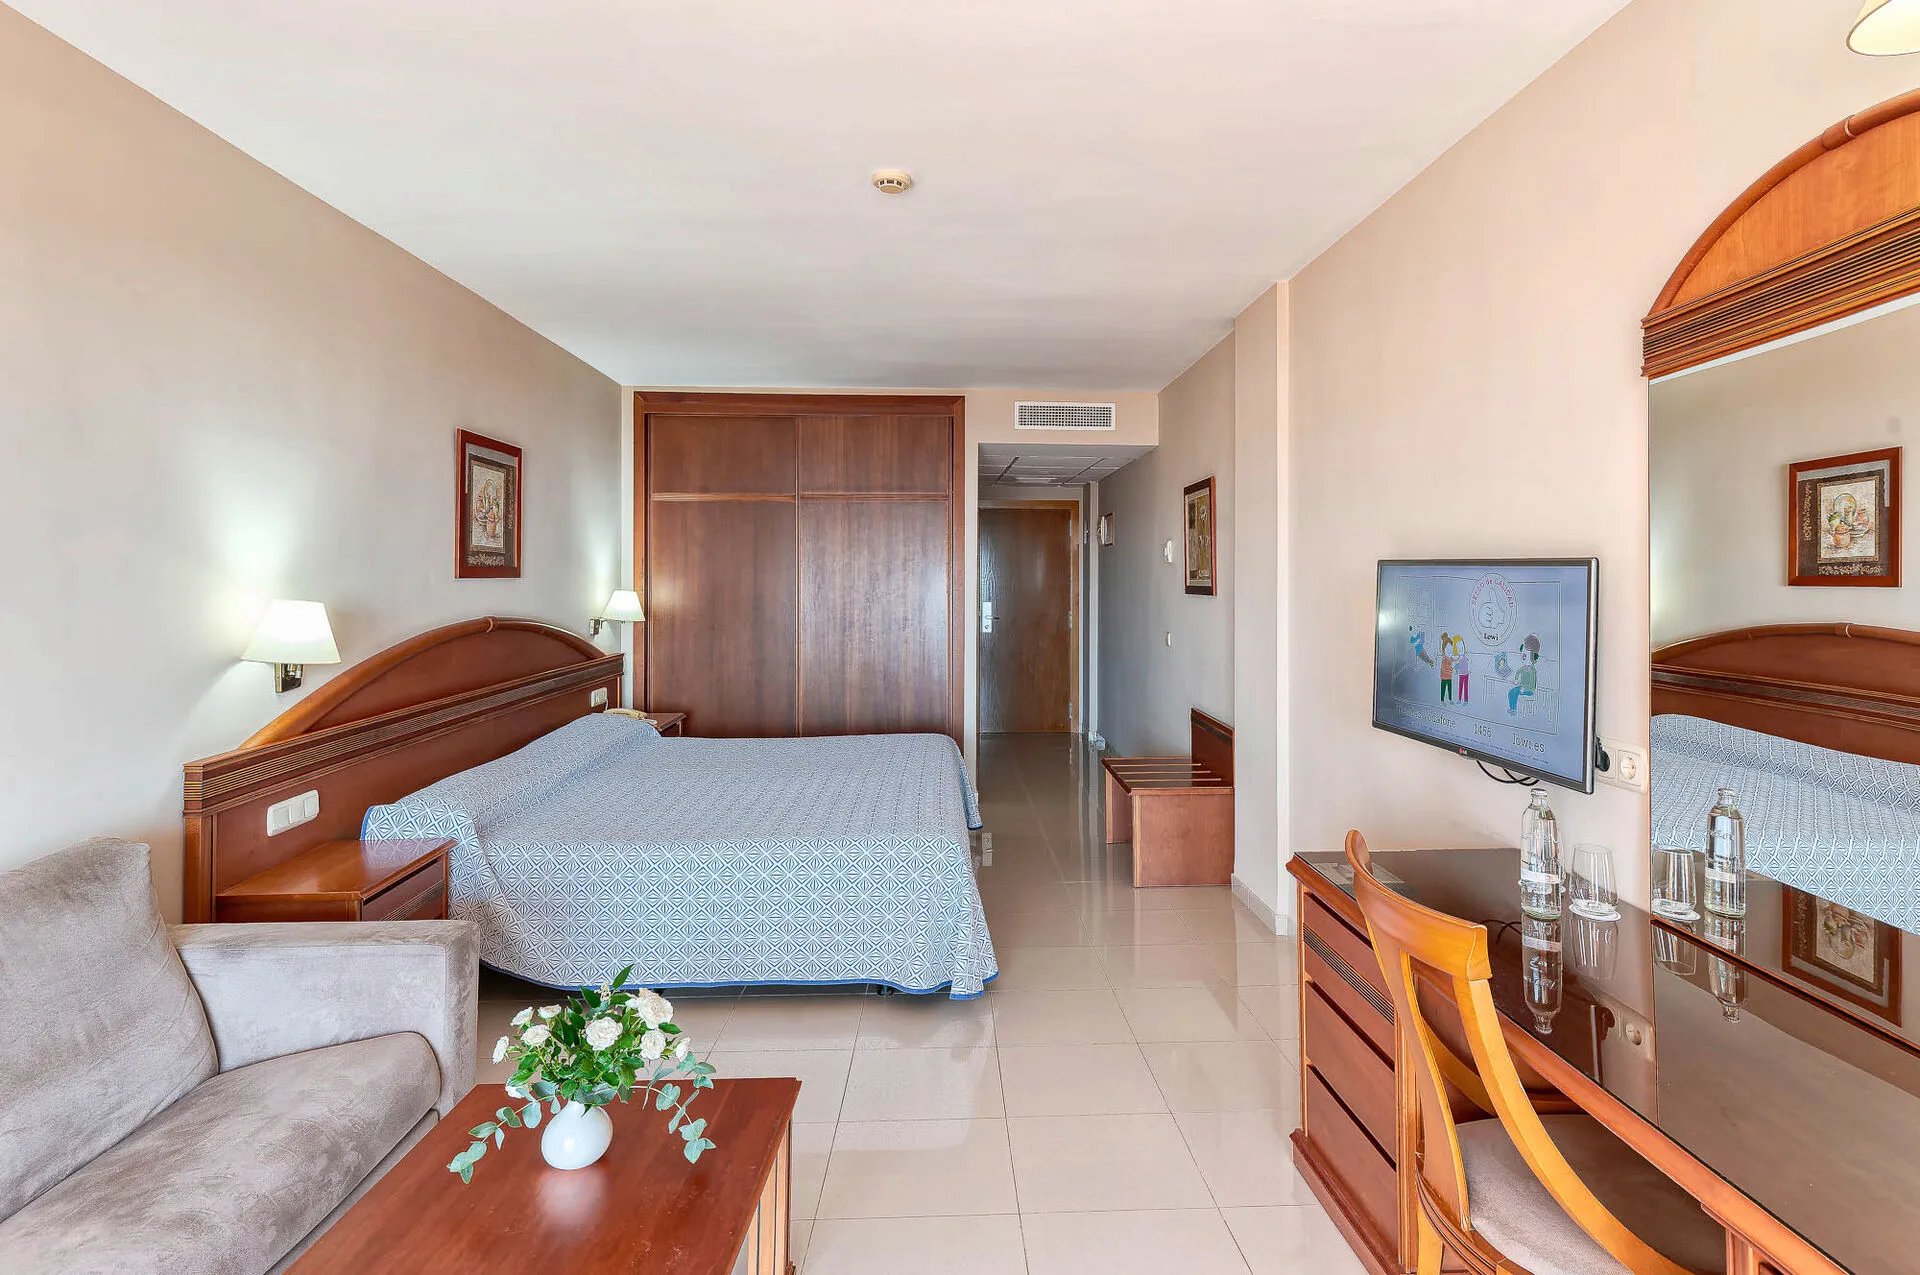 Espagne - Andalousie - Almuñecar - Hotel Bahia Tropical 4*